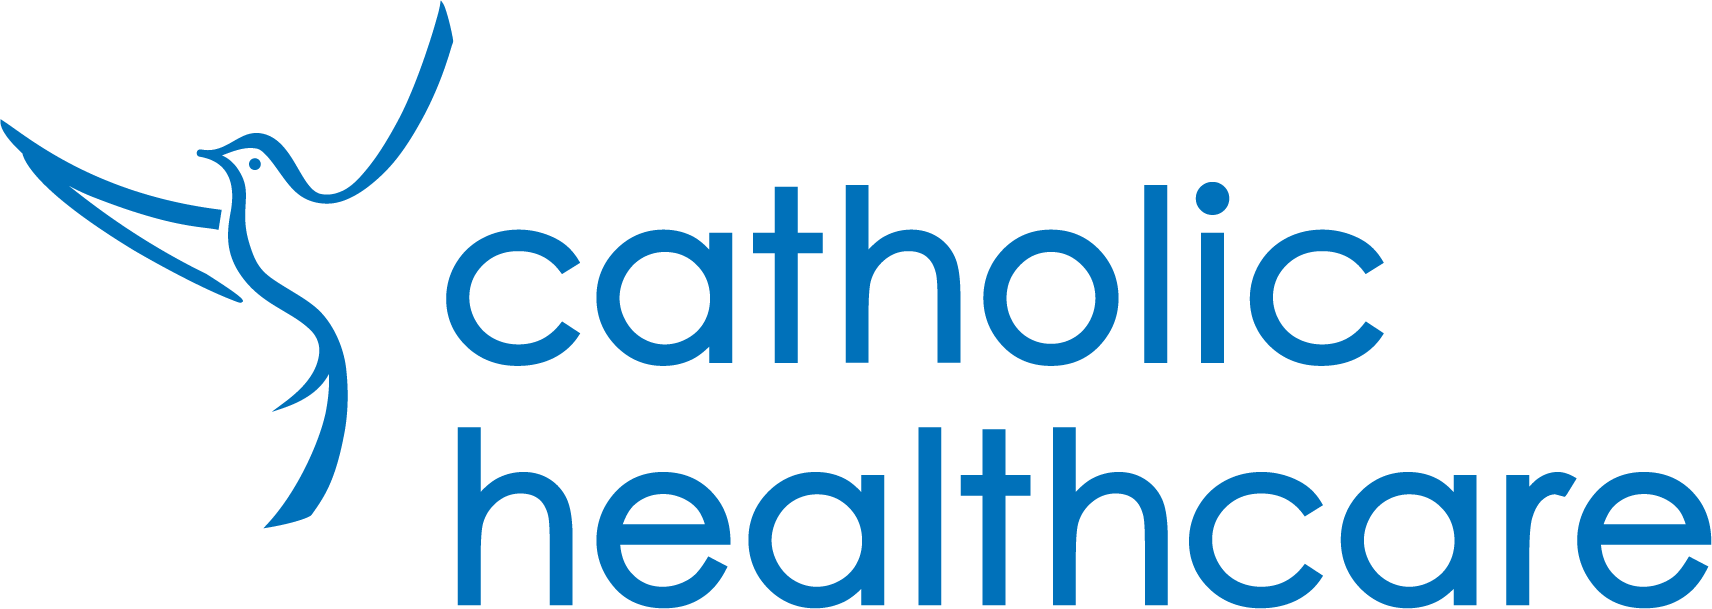 Catholic Healthcare